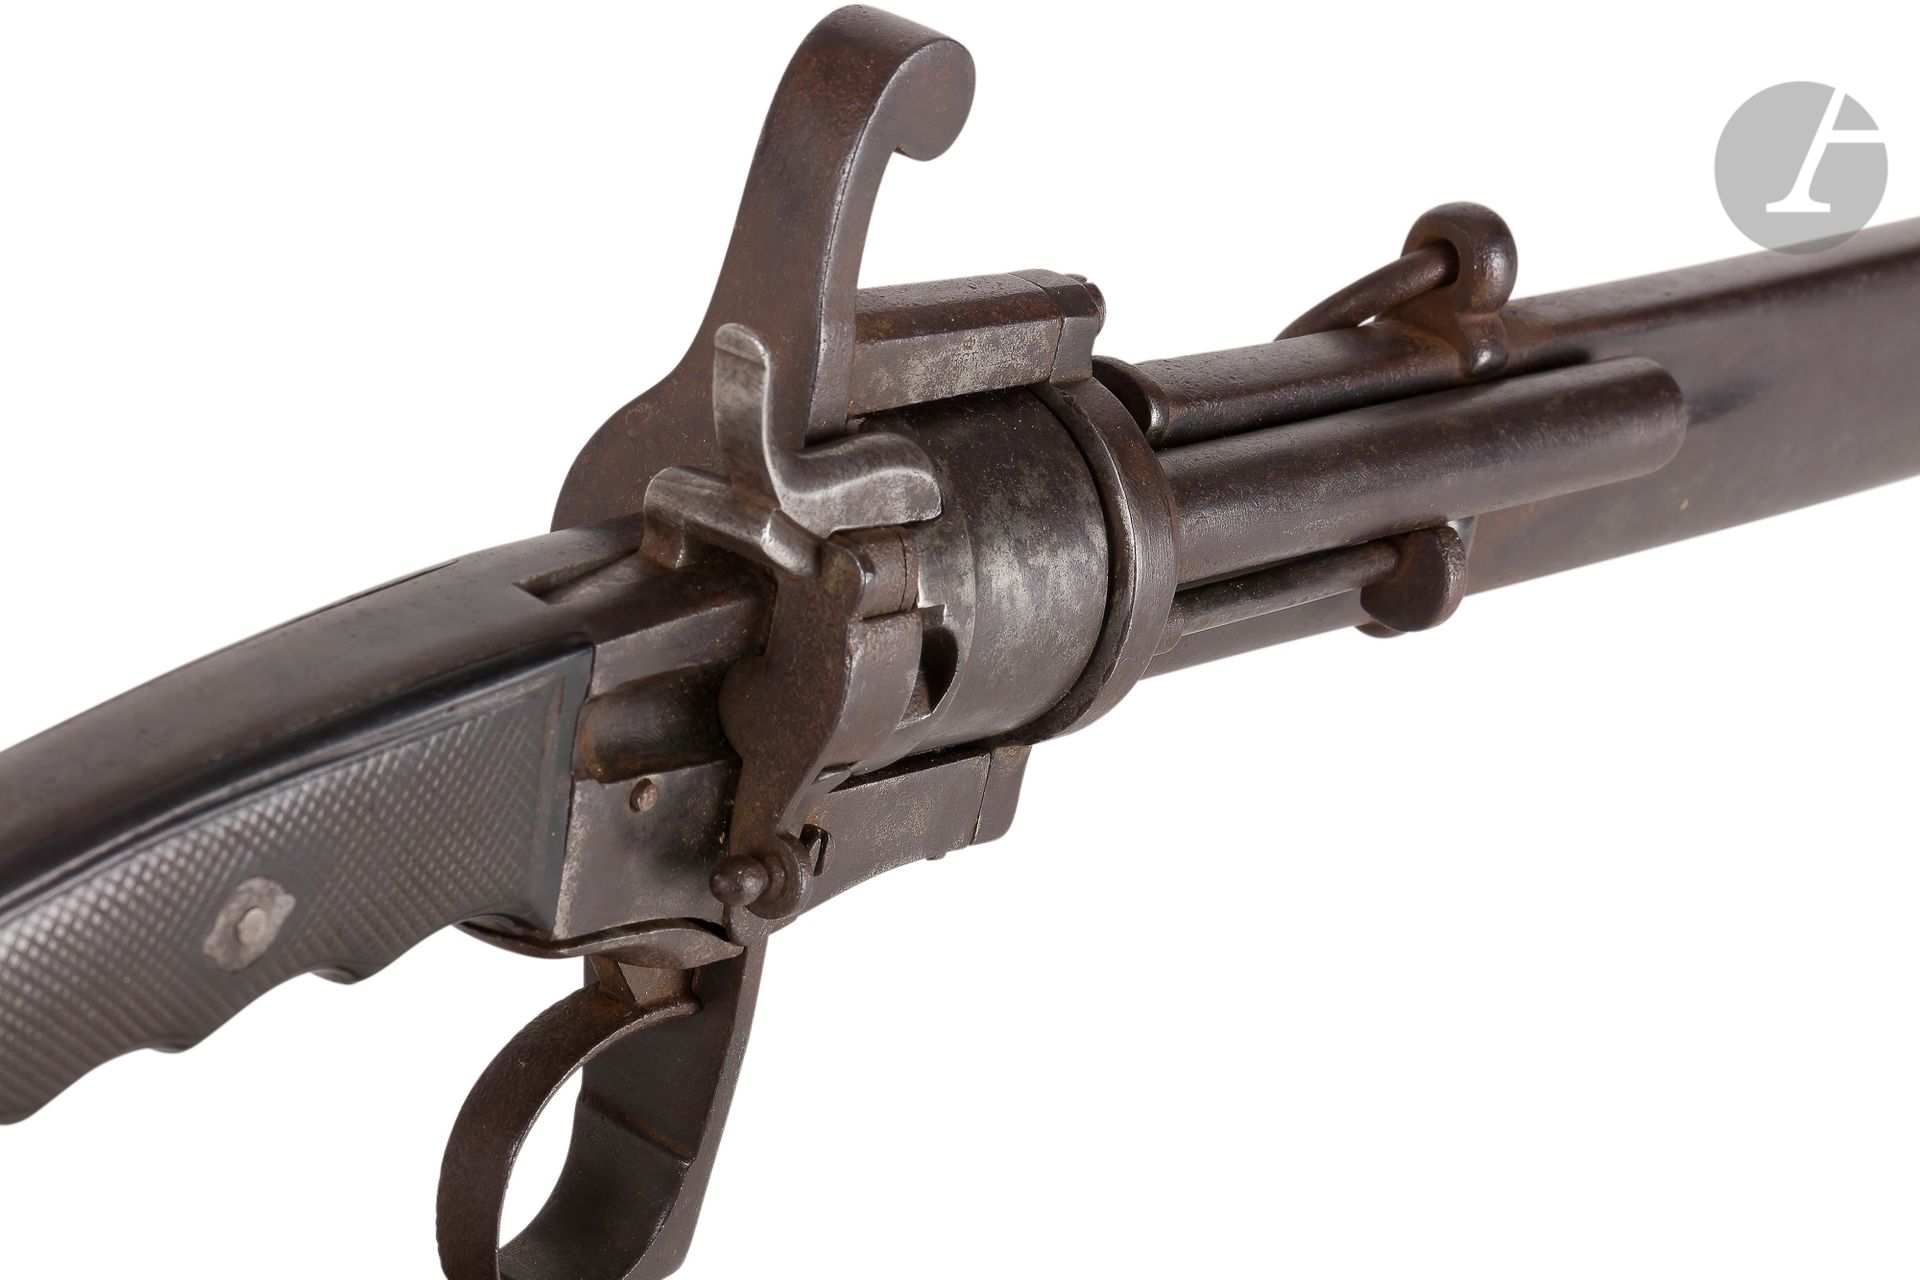 Null Pinfire-Revolver-Säbel, sechs Schuss, Kaliber 7 mm
. Griff mit geschwärzten&hellip;